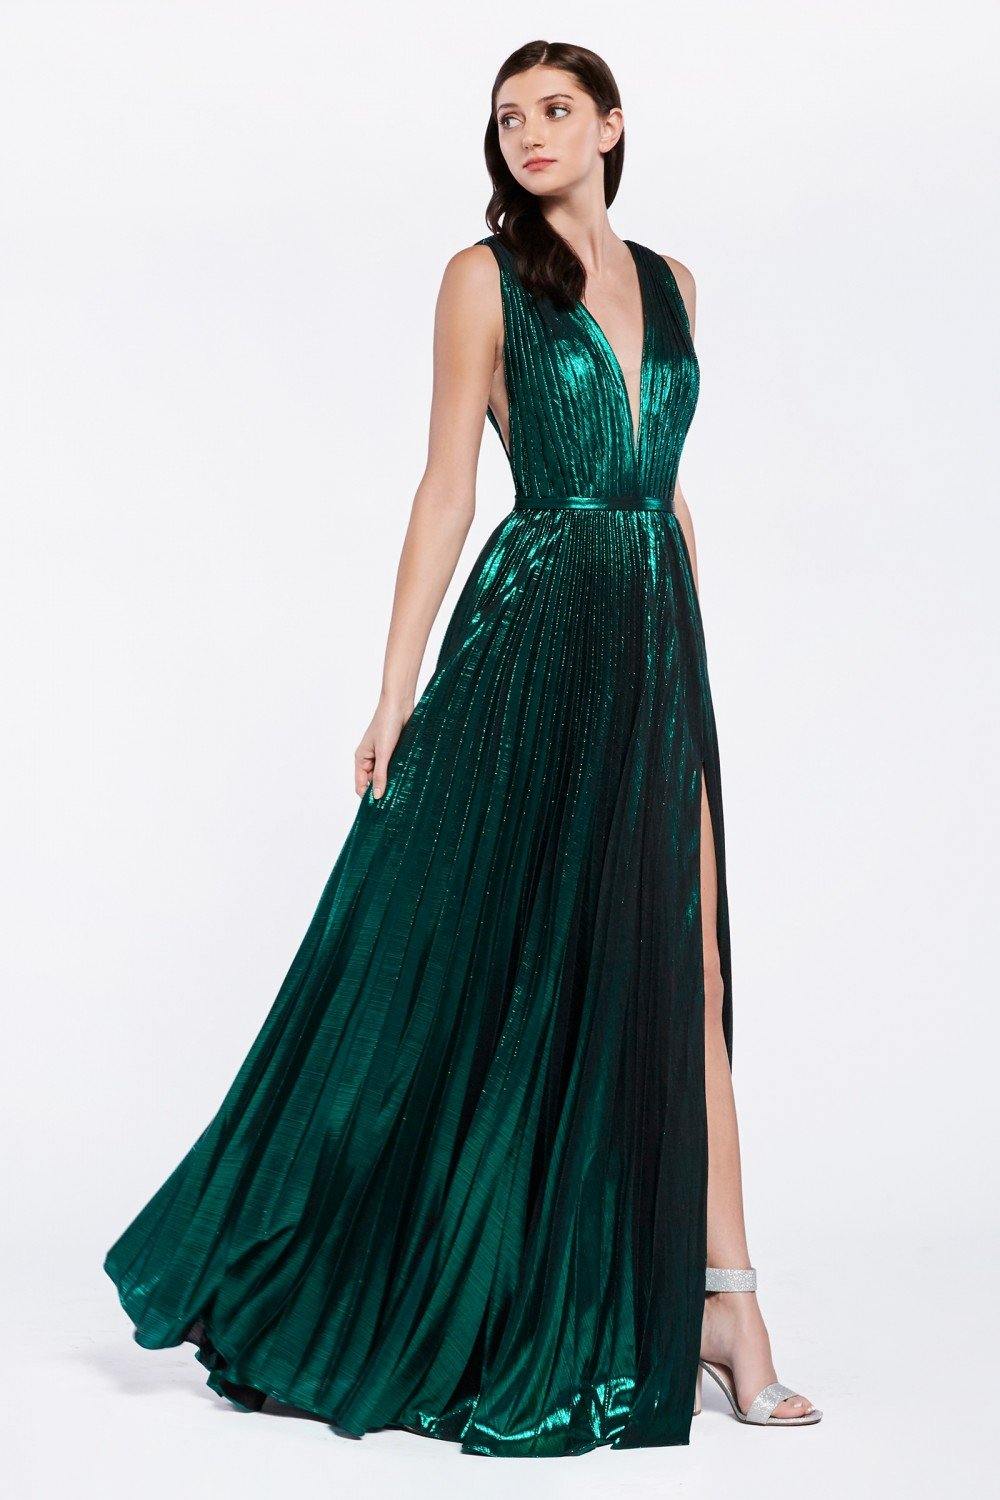 Metallic Long Prom Dress Evening Gown - The Dress Outlet Cinderella Divine